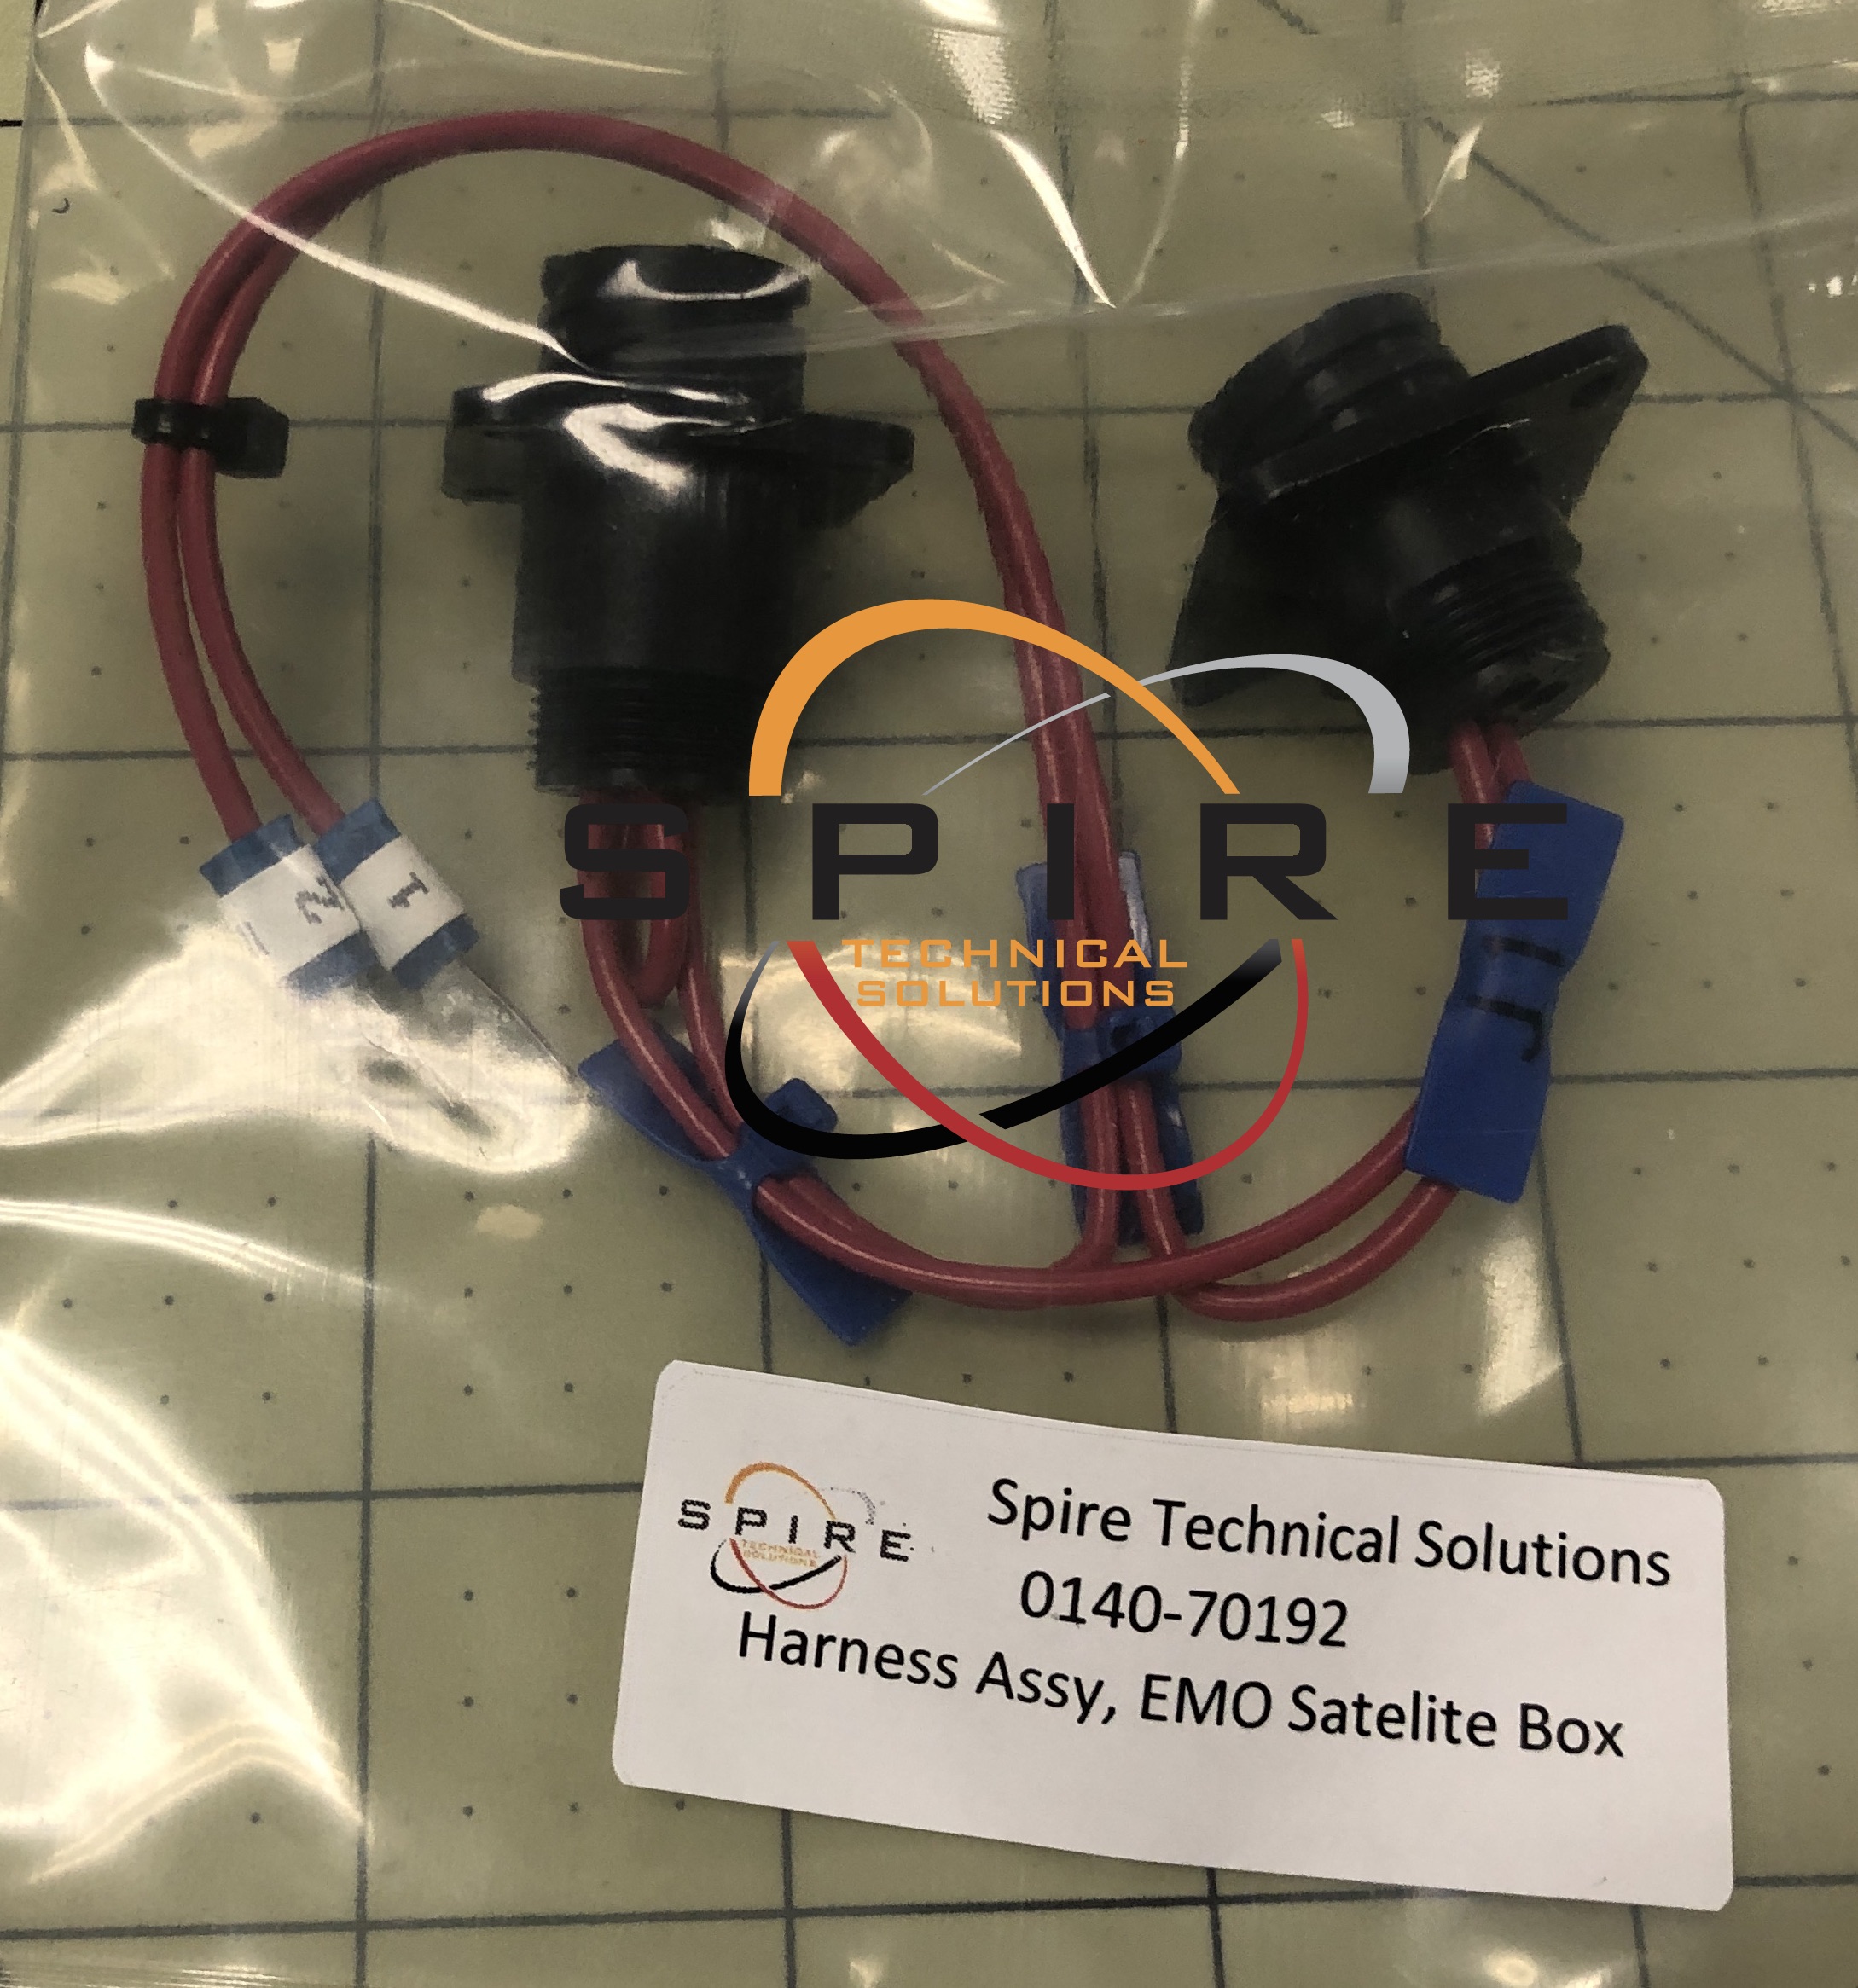 Harness Assy, EMO Satelite Box